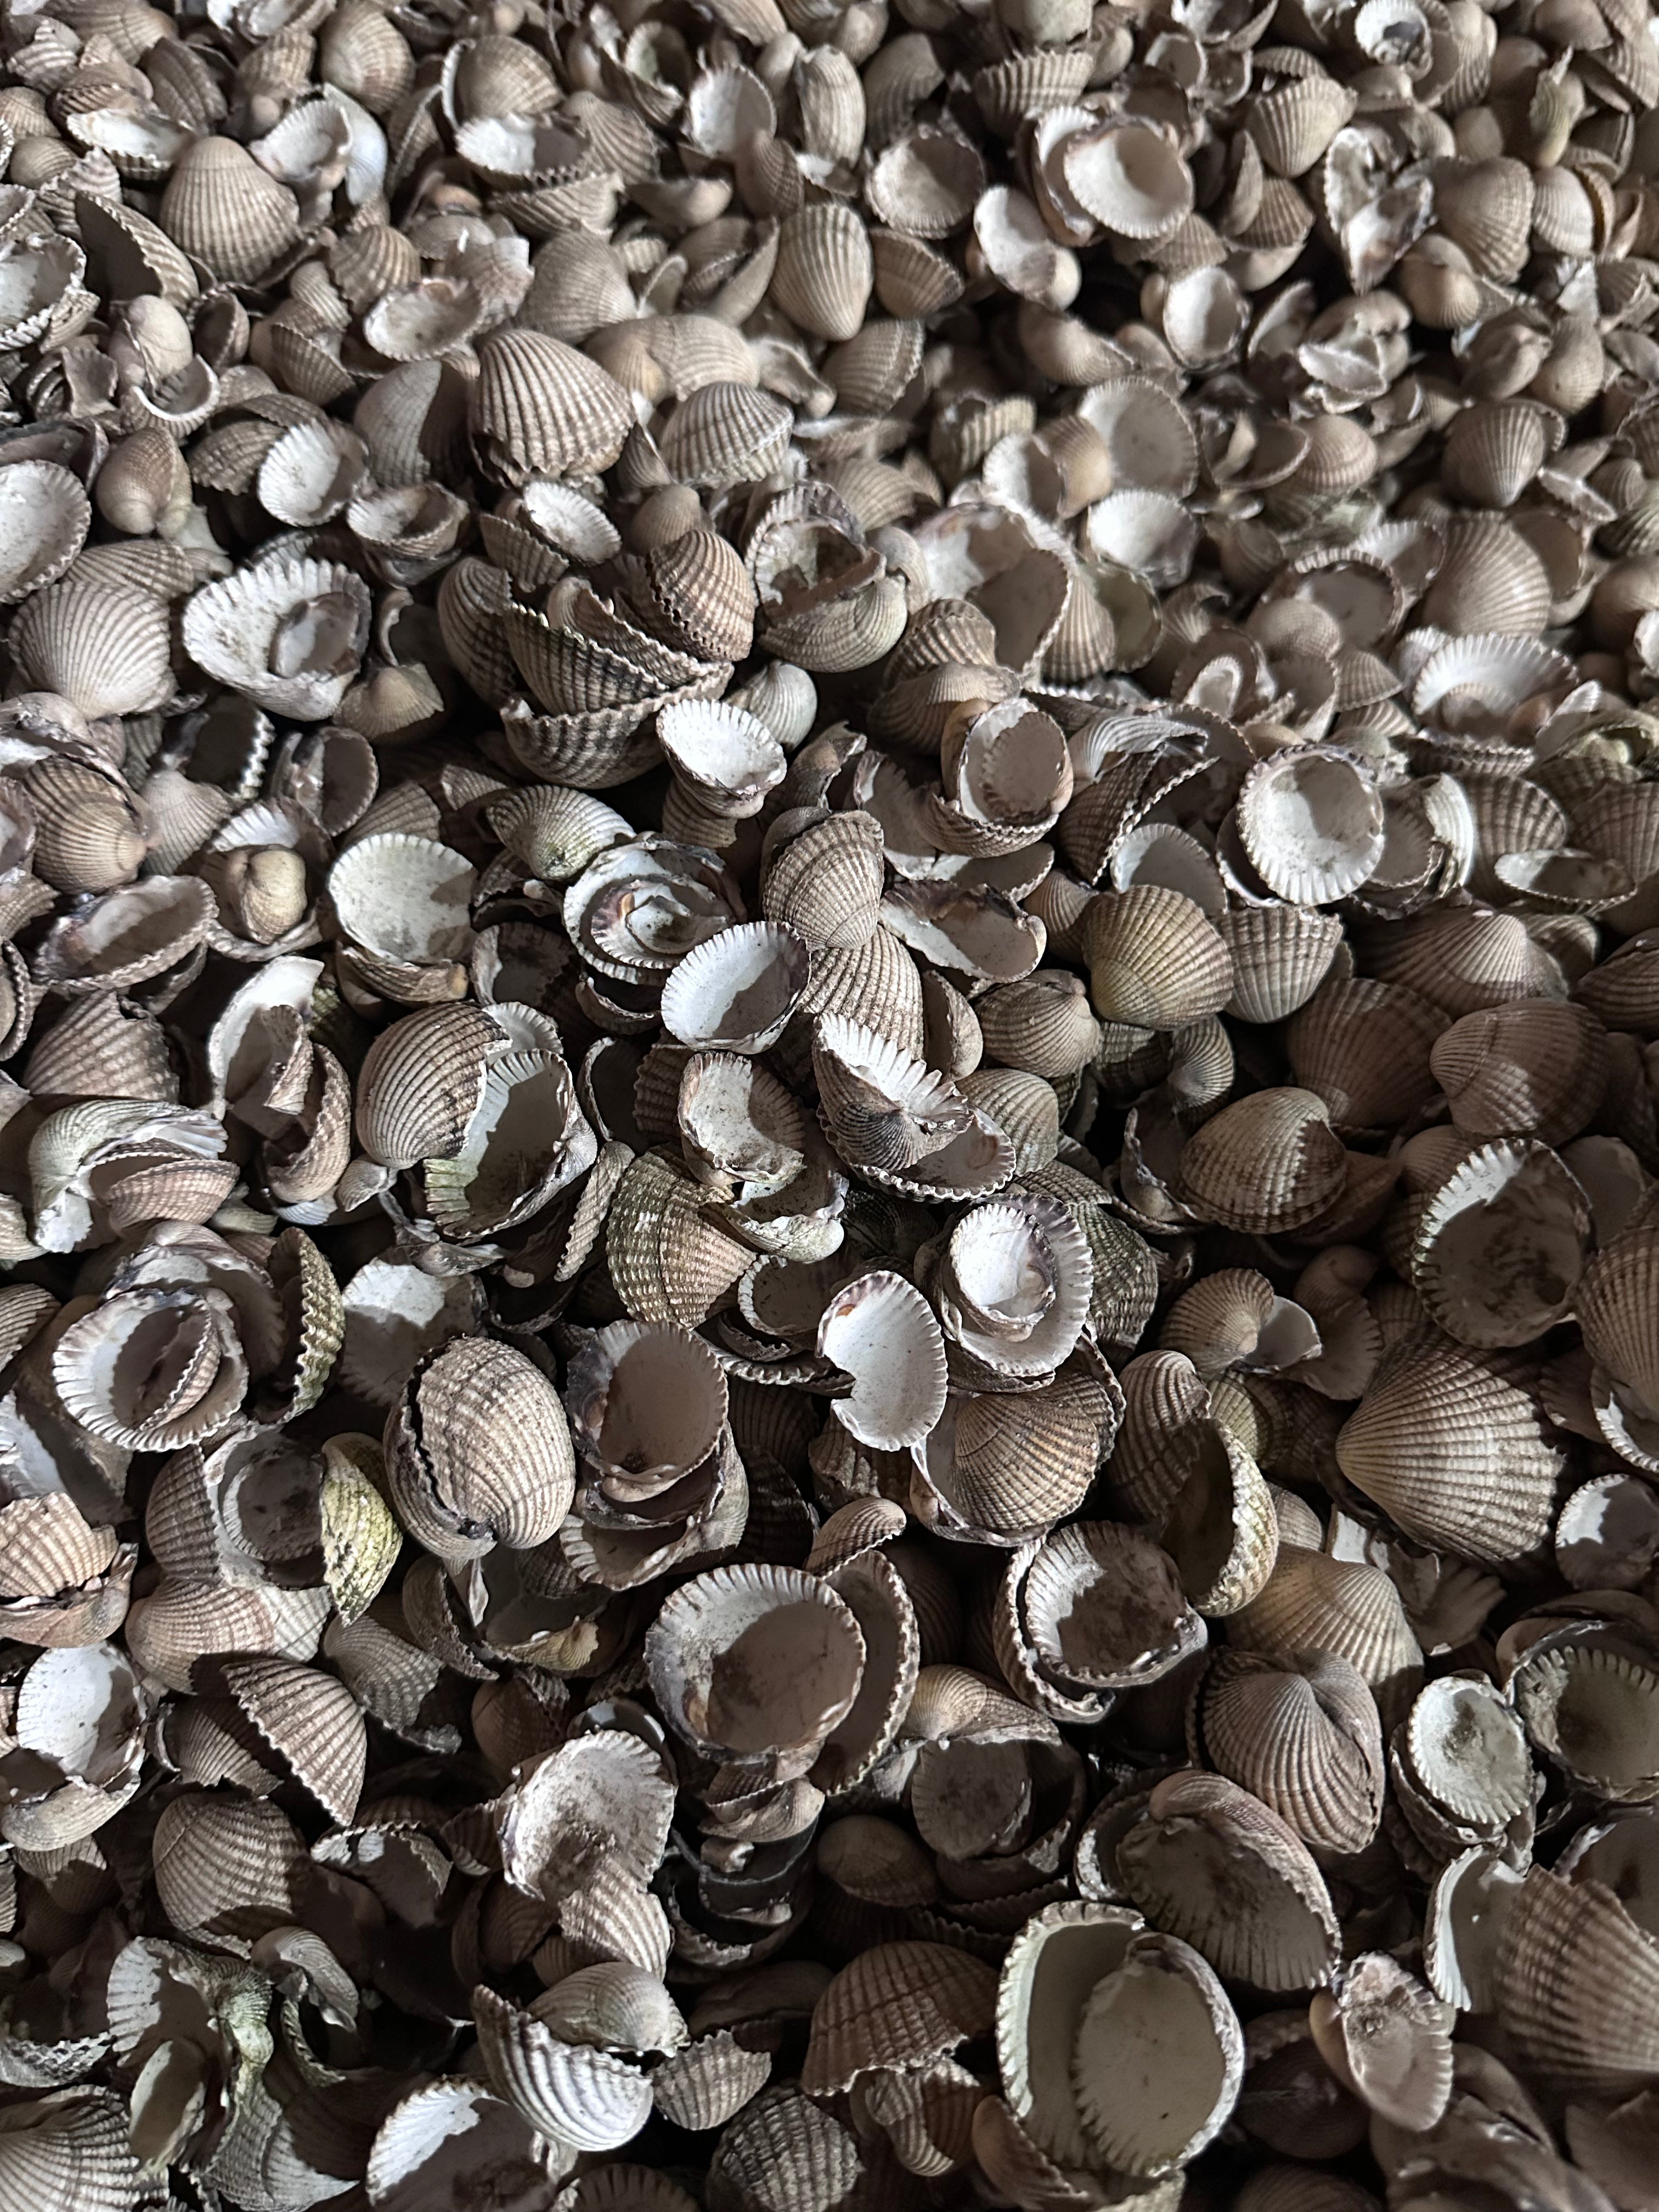 Buy Sea Shells - Whole Cockle